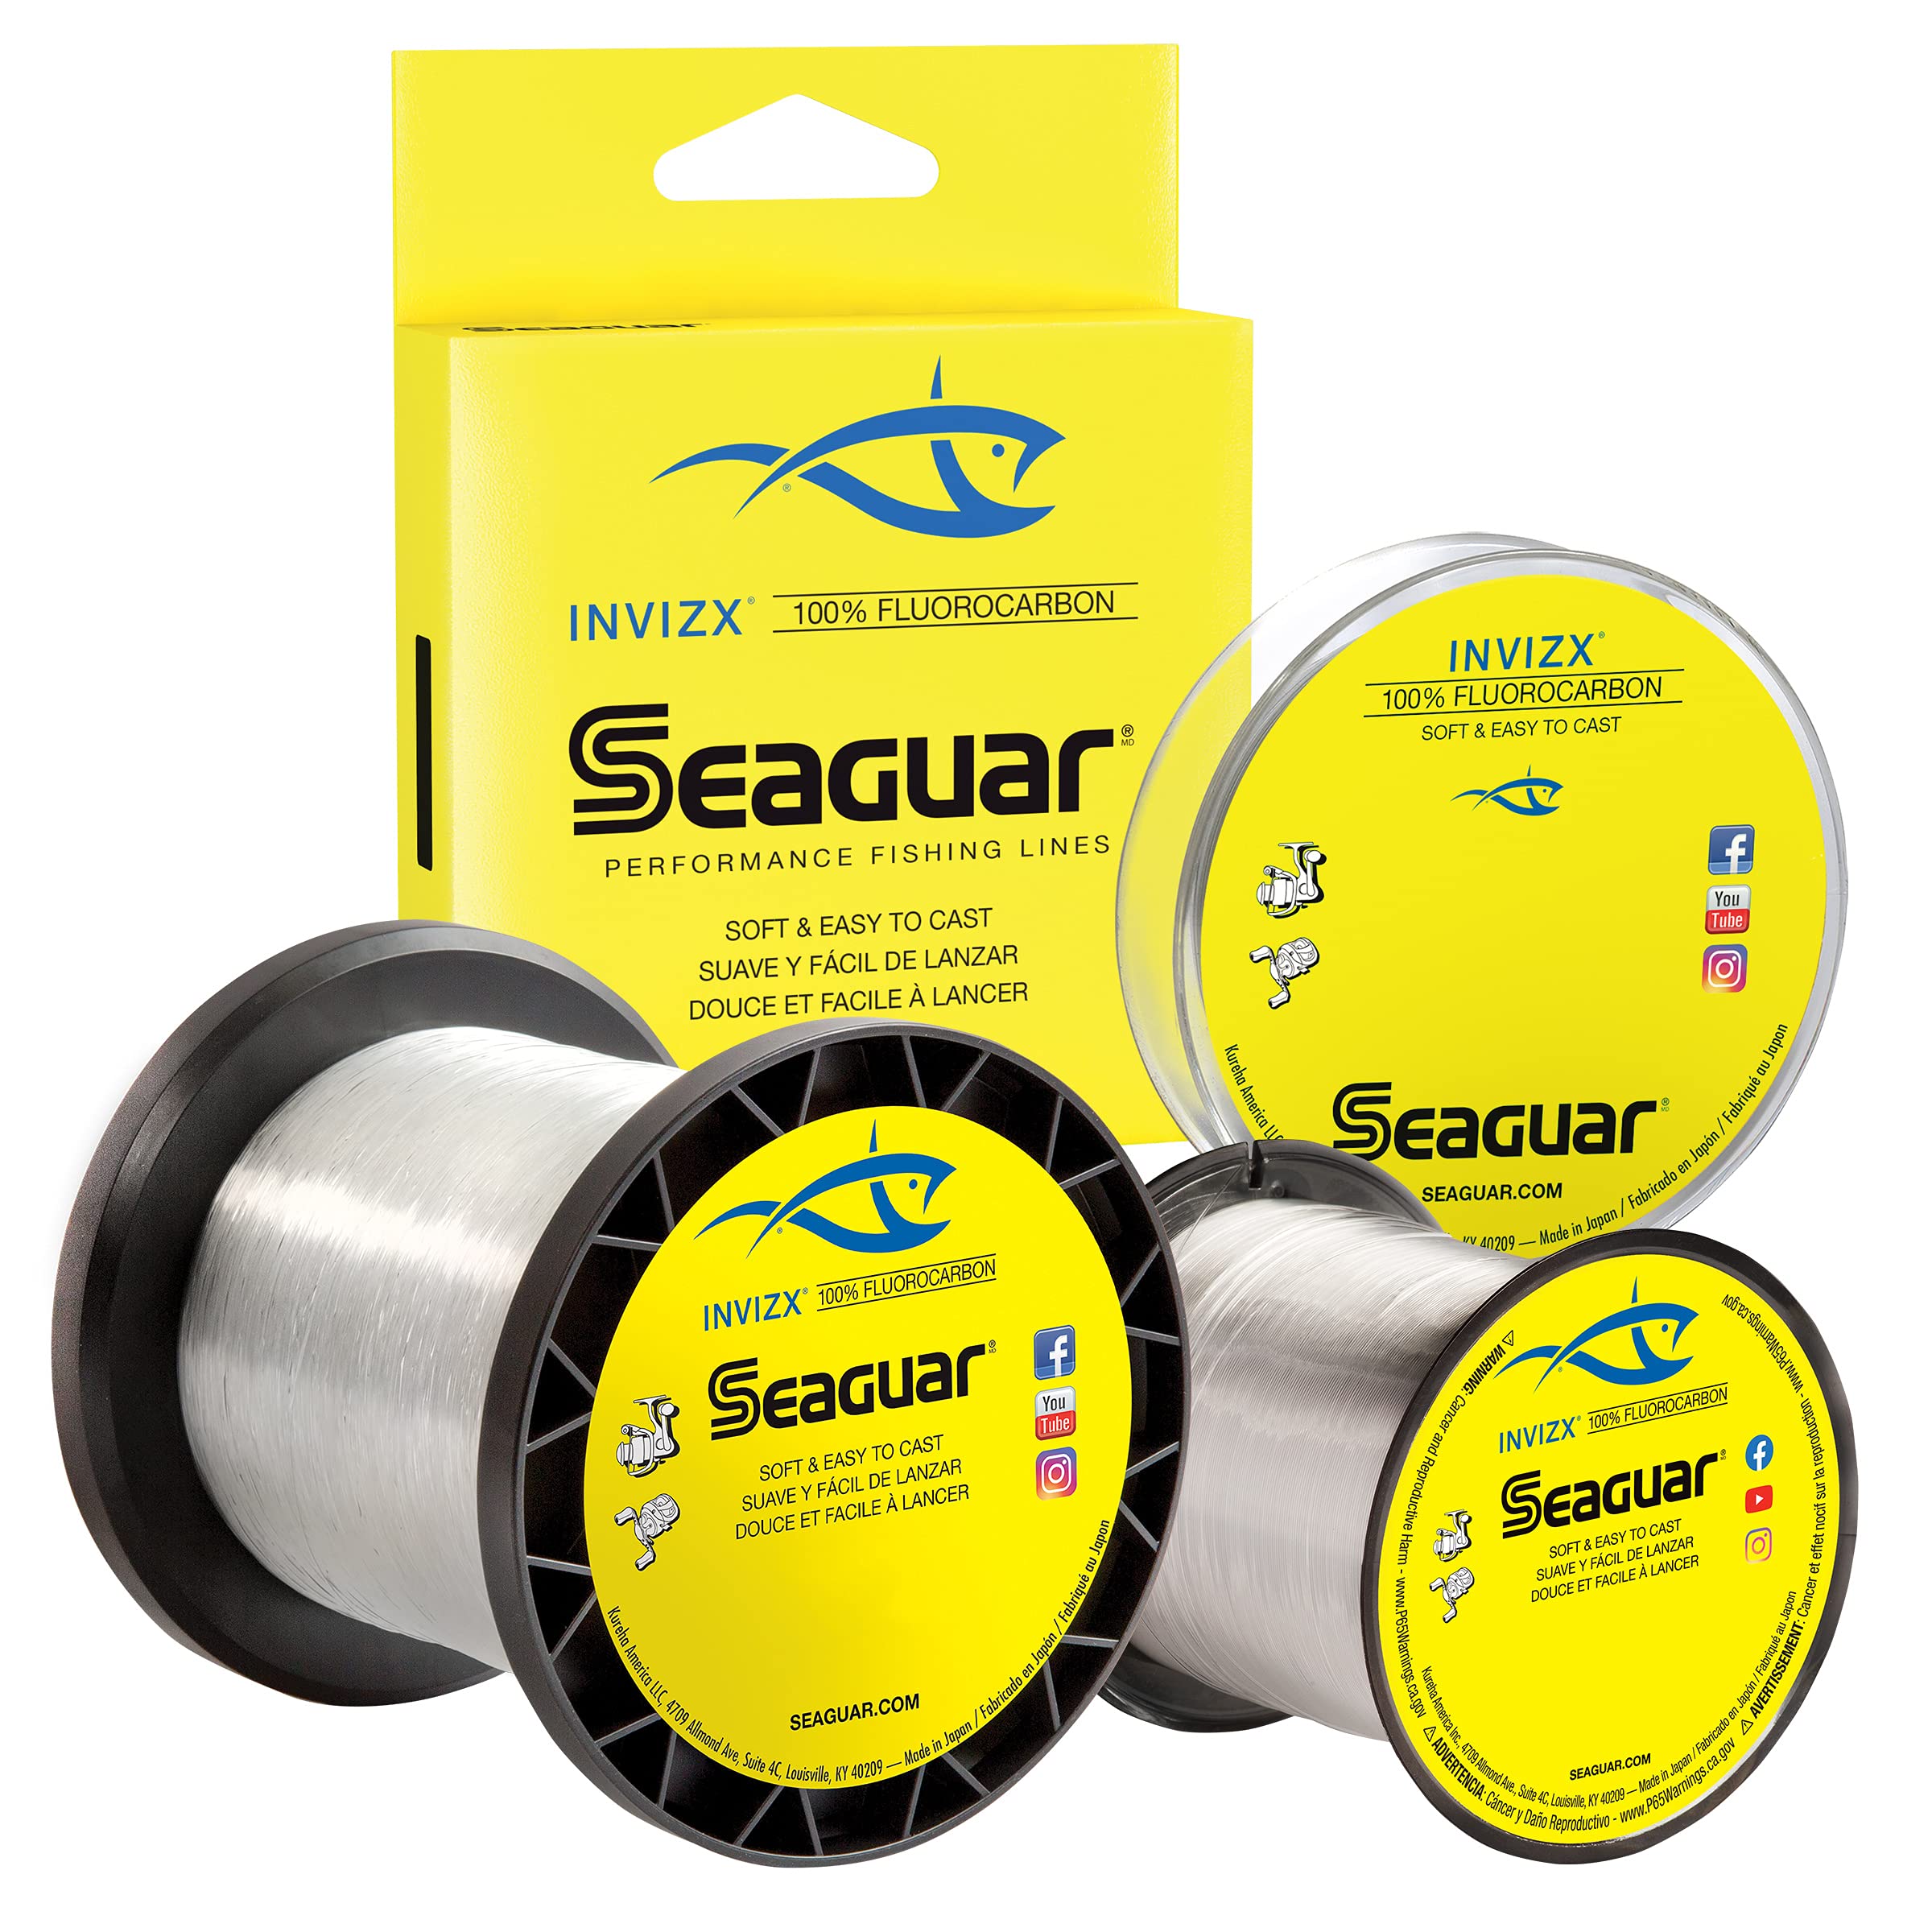 Seaguar Invizx 100% Fluorocarbon 200 Yard Fishing Line (20-Pound), Clear  (20VZ200)